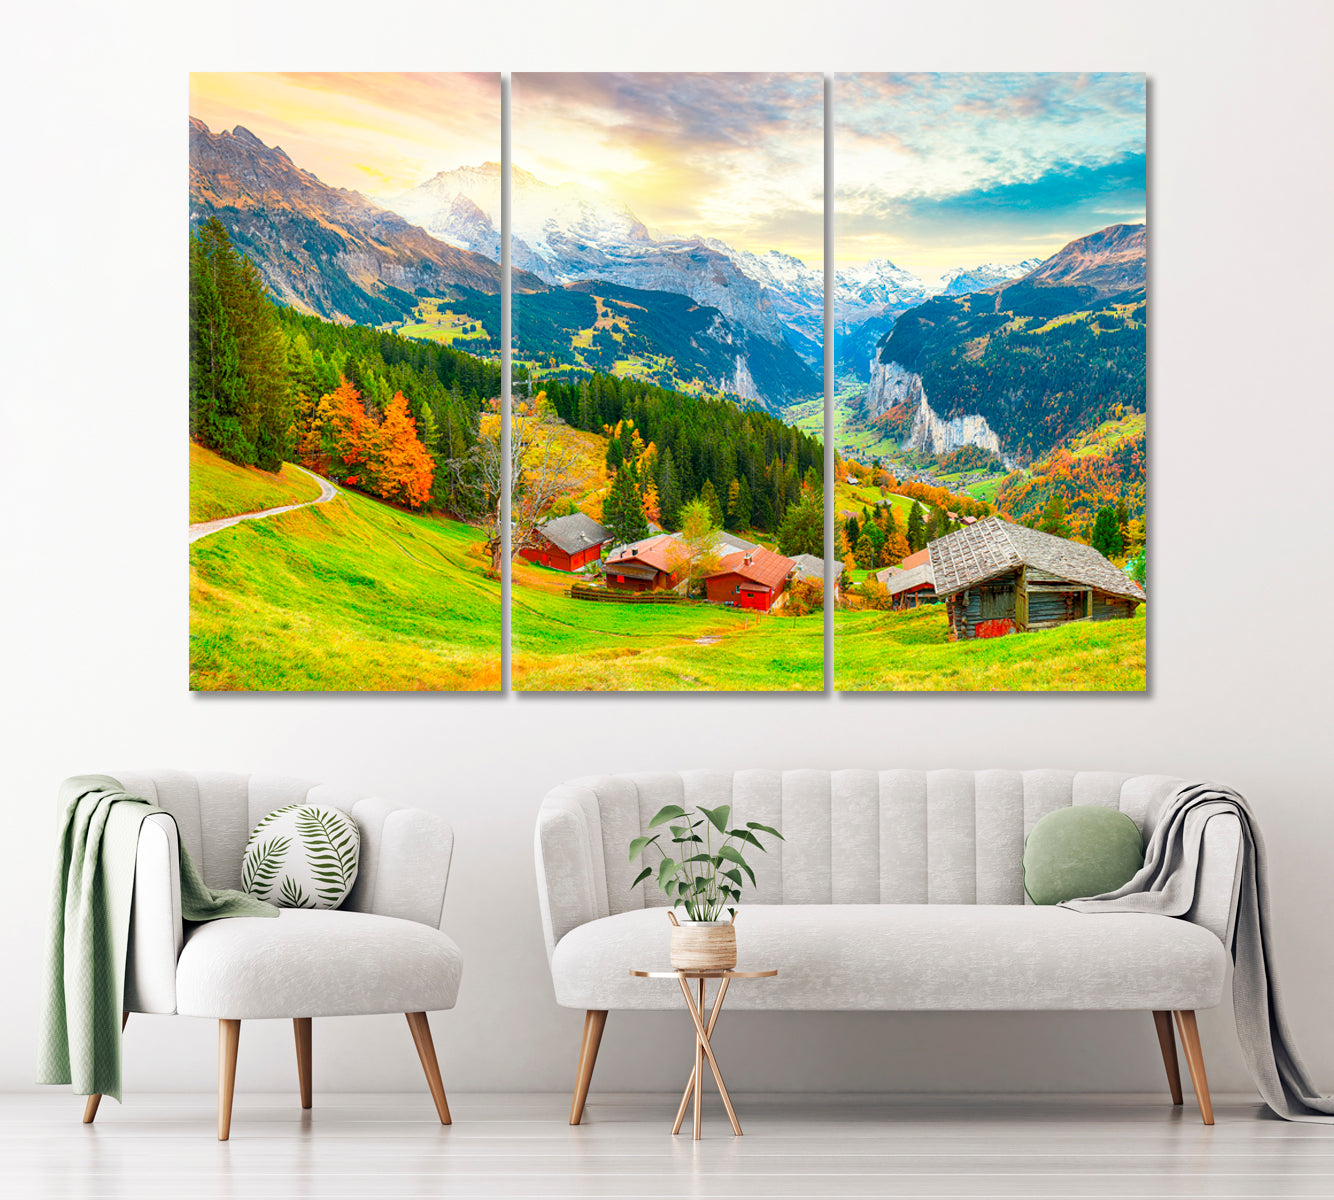 Lauterbrunnen Valley with Jungfrau Mountain Switzerland Canvas Print ArtLexy 3 Panels 36"x24" inches 